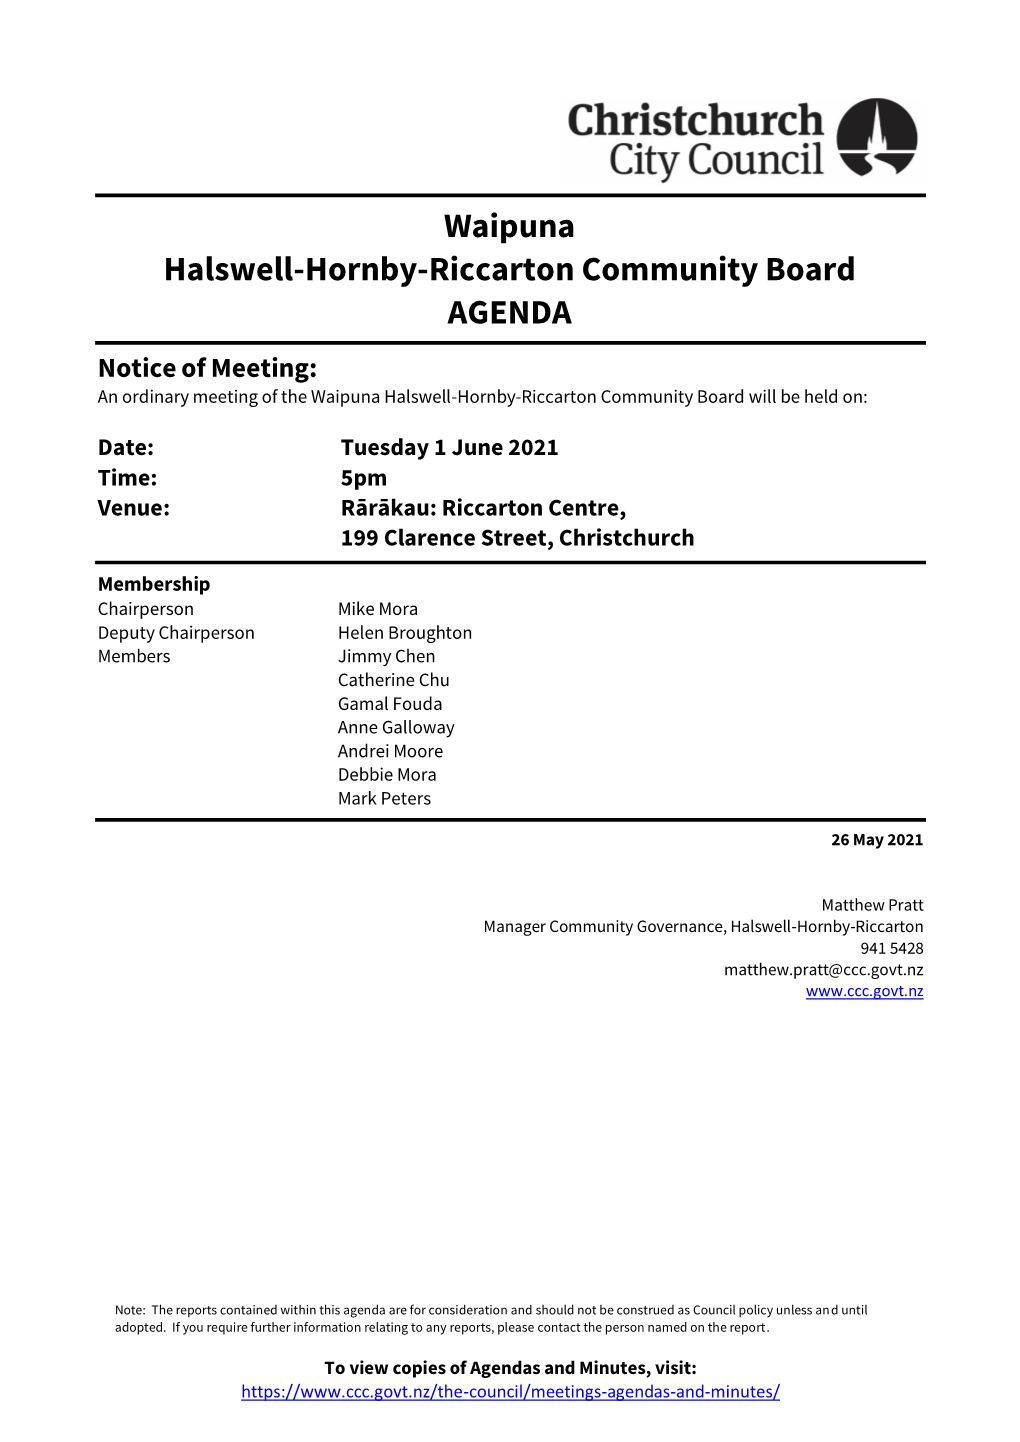 Agenda of Waipuna Halswell-Hornby-Riccarton Community Board